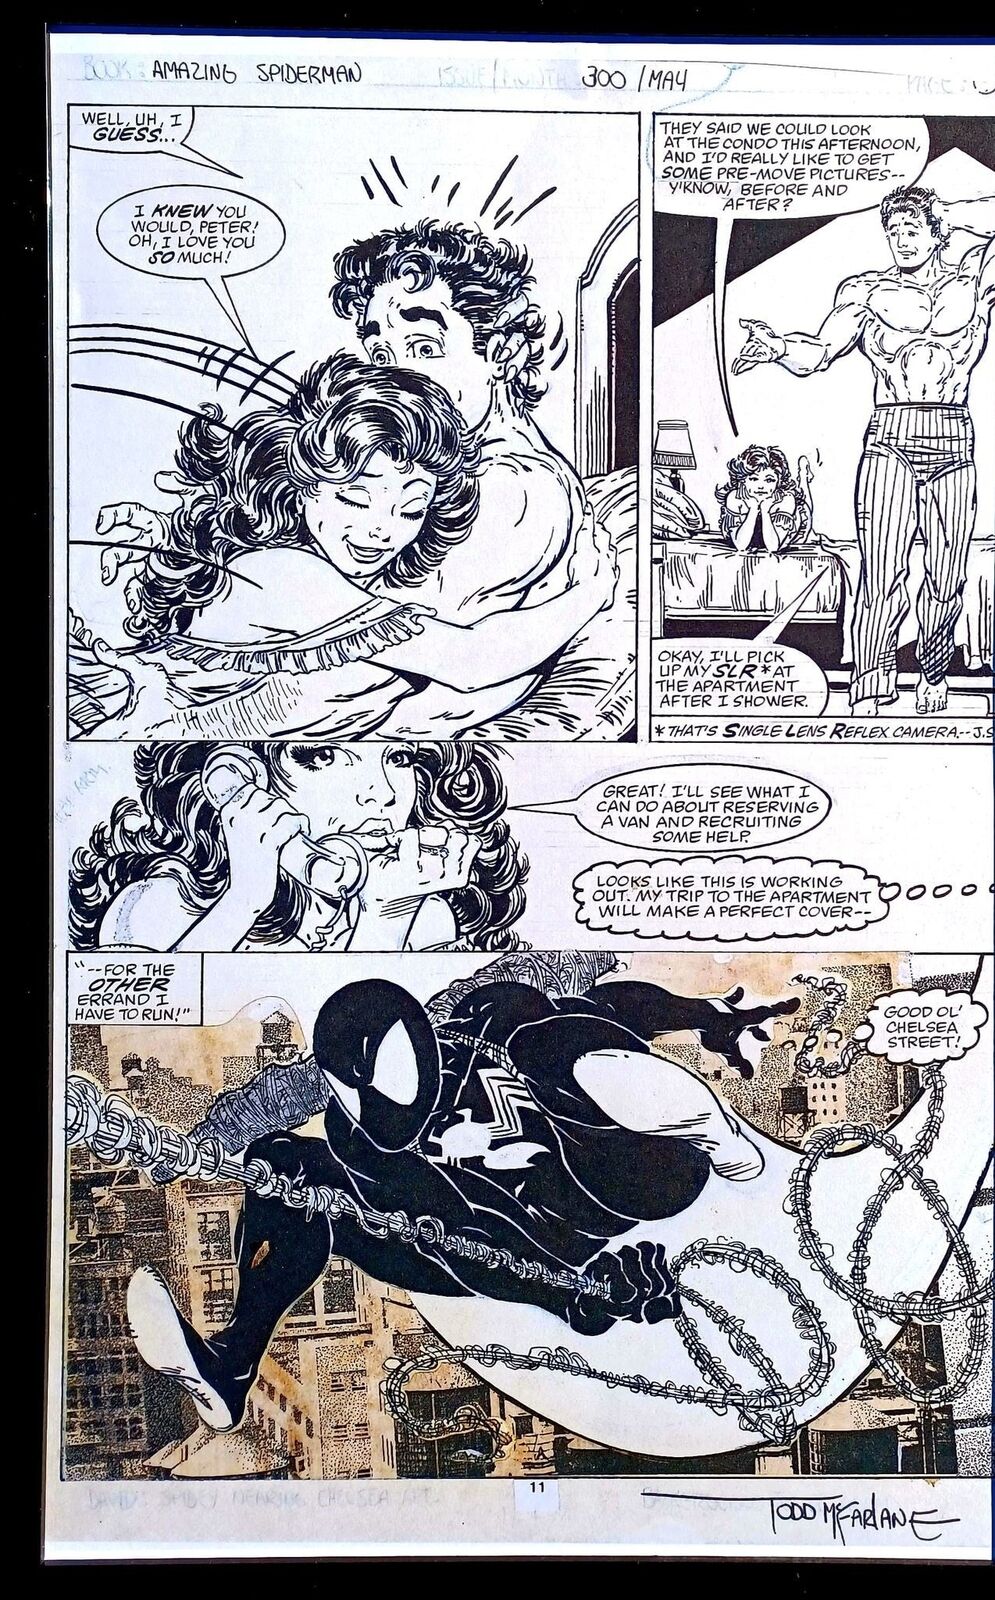 Amazing Spider-Man #300 pg. 8 by Todd McFarlane 11x17 FRAMED Original Art Print 